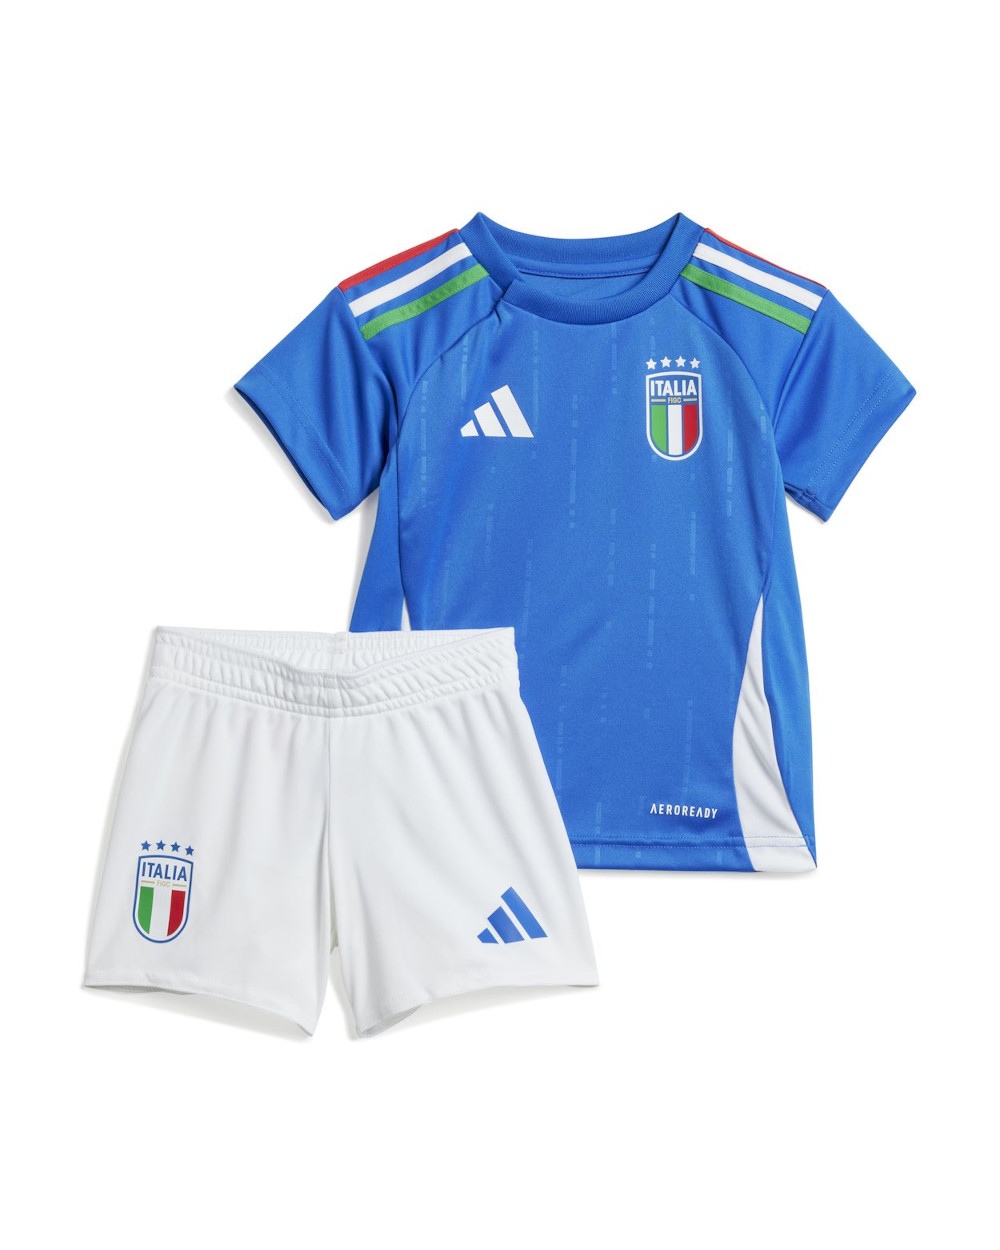  Italia Italy FIGC Adidas Baby Mini kit bebè completo calcio Bambino neonato